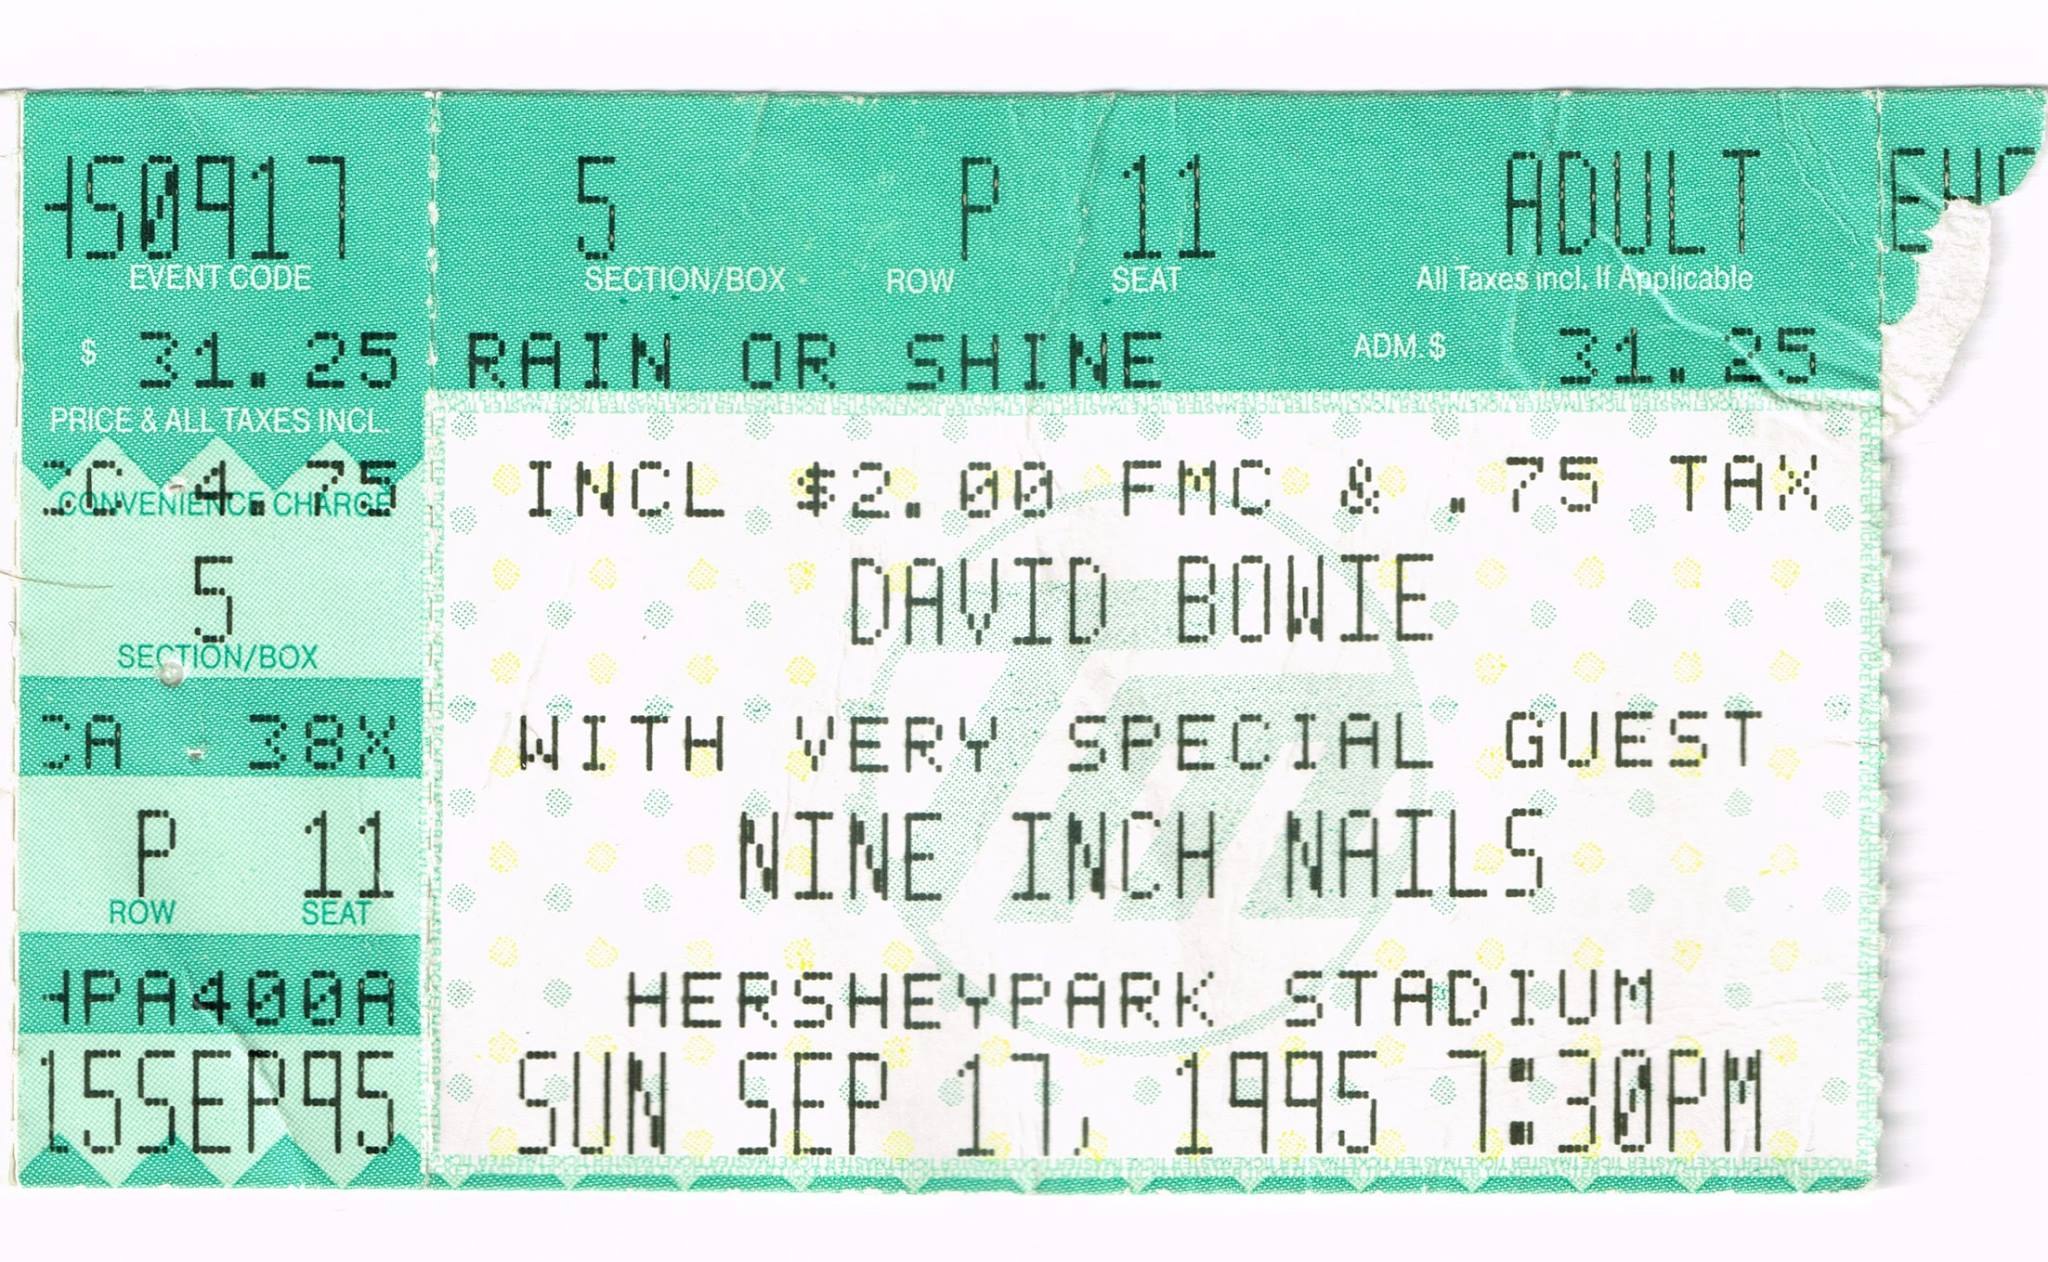 1995/09/17 Ticket